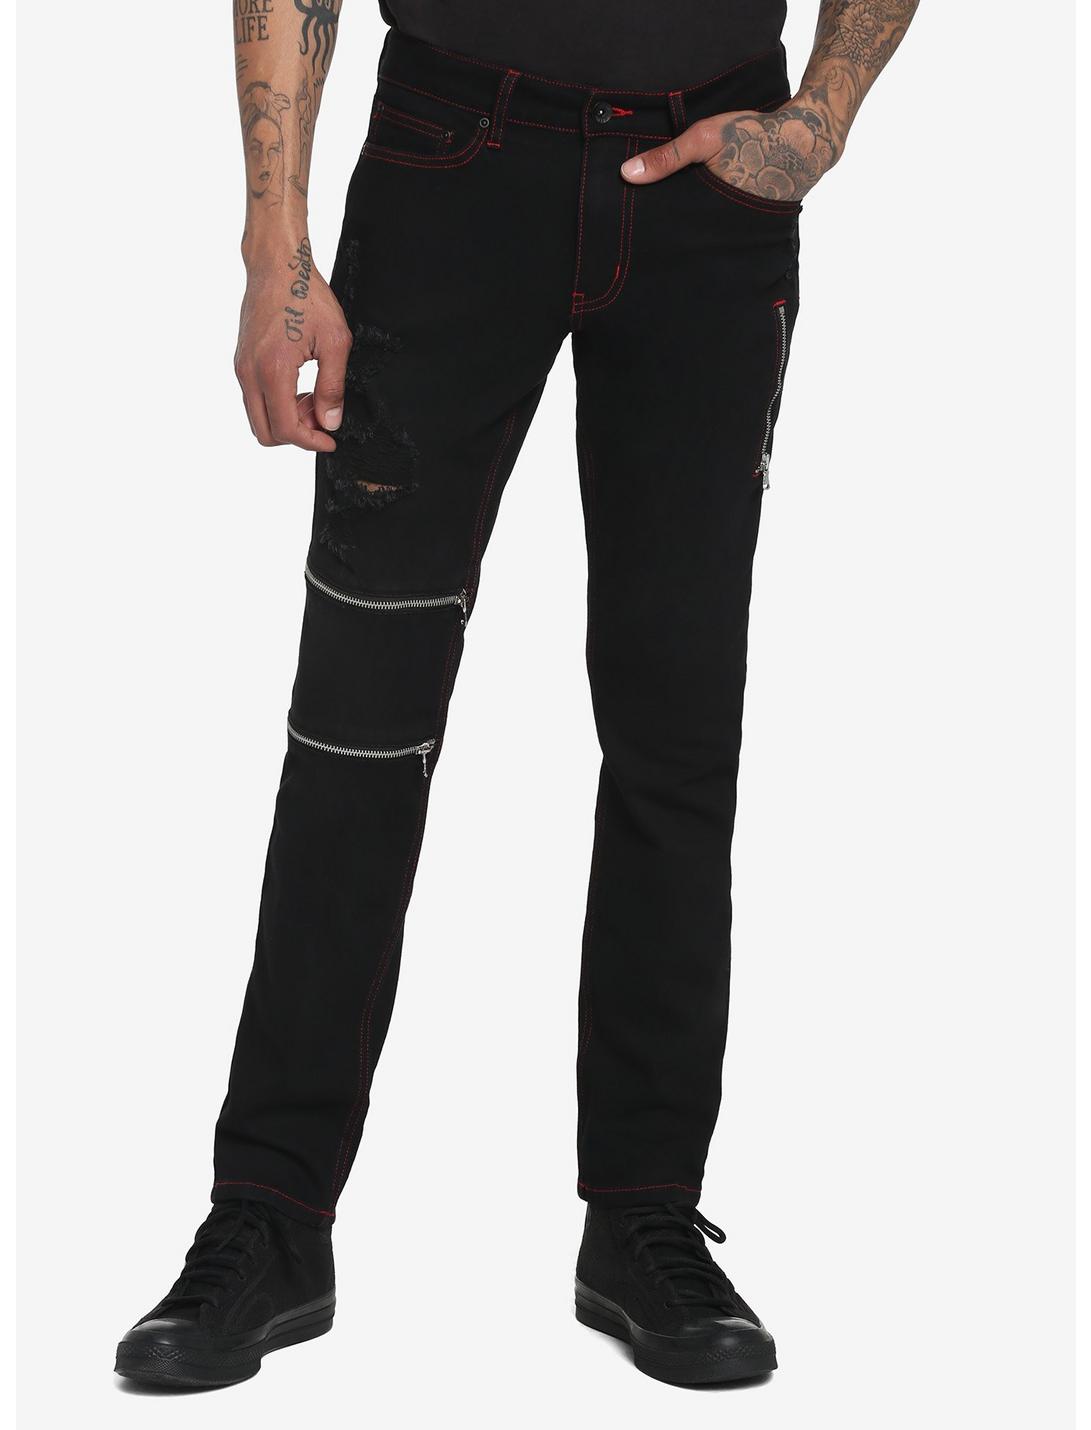 Black Zipper Skinny Jeans, BLACK, hi-res